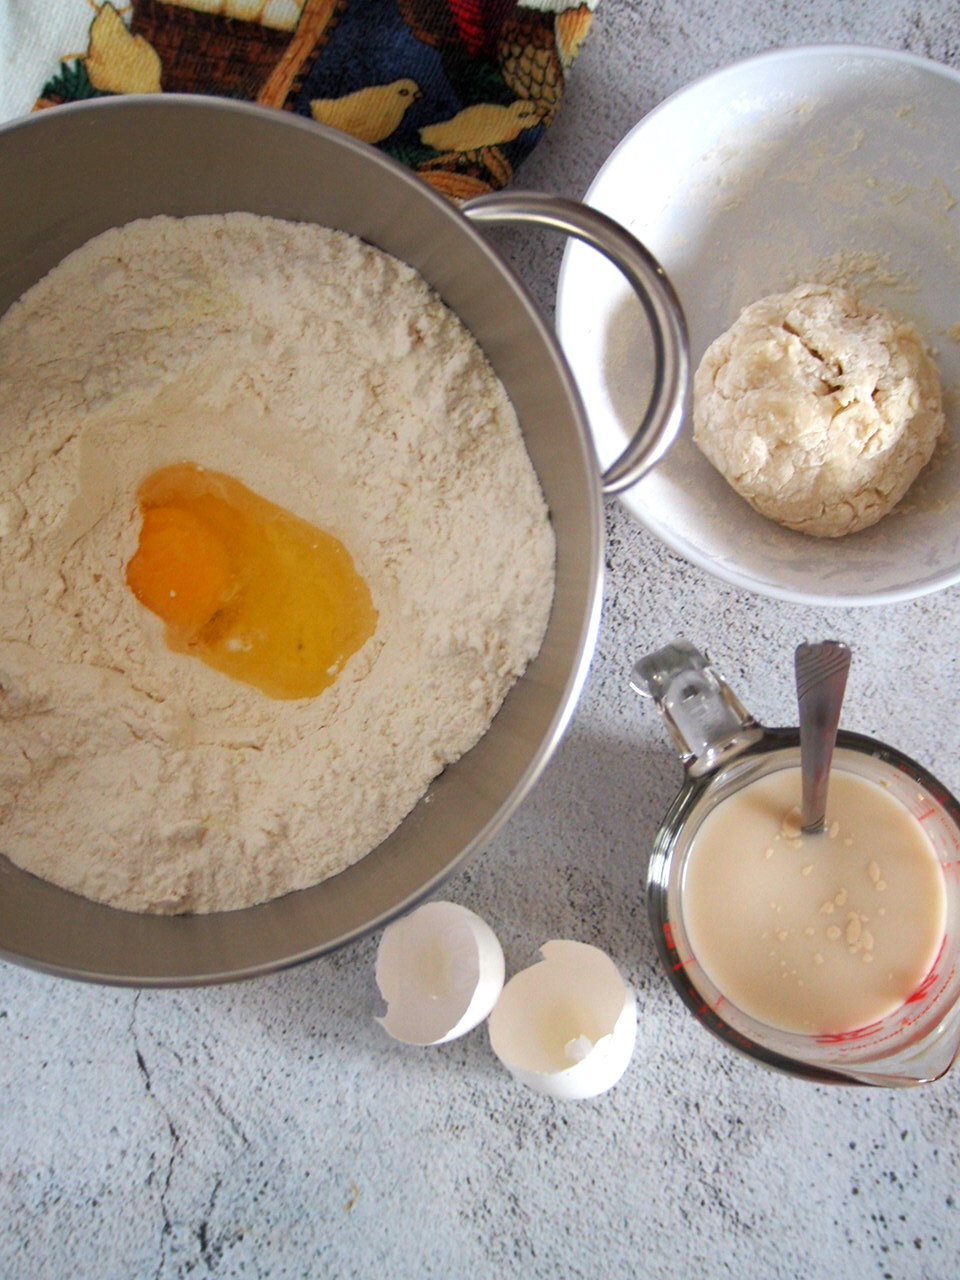 Sugar Buns dough being mixed together.